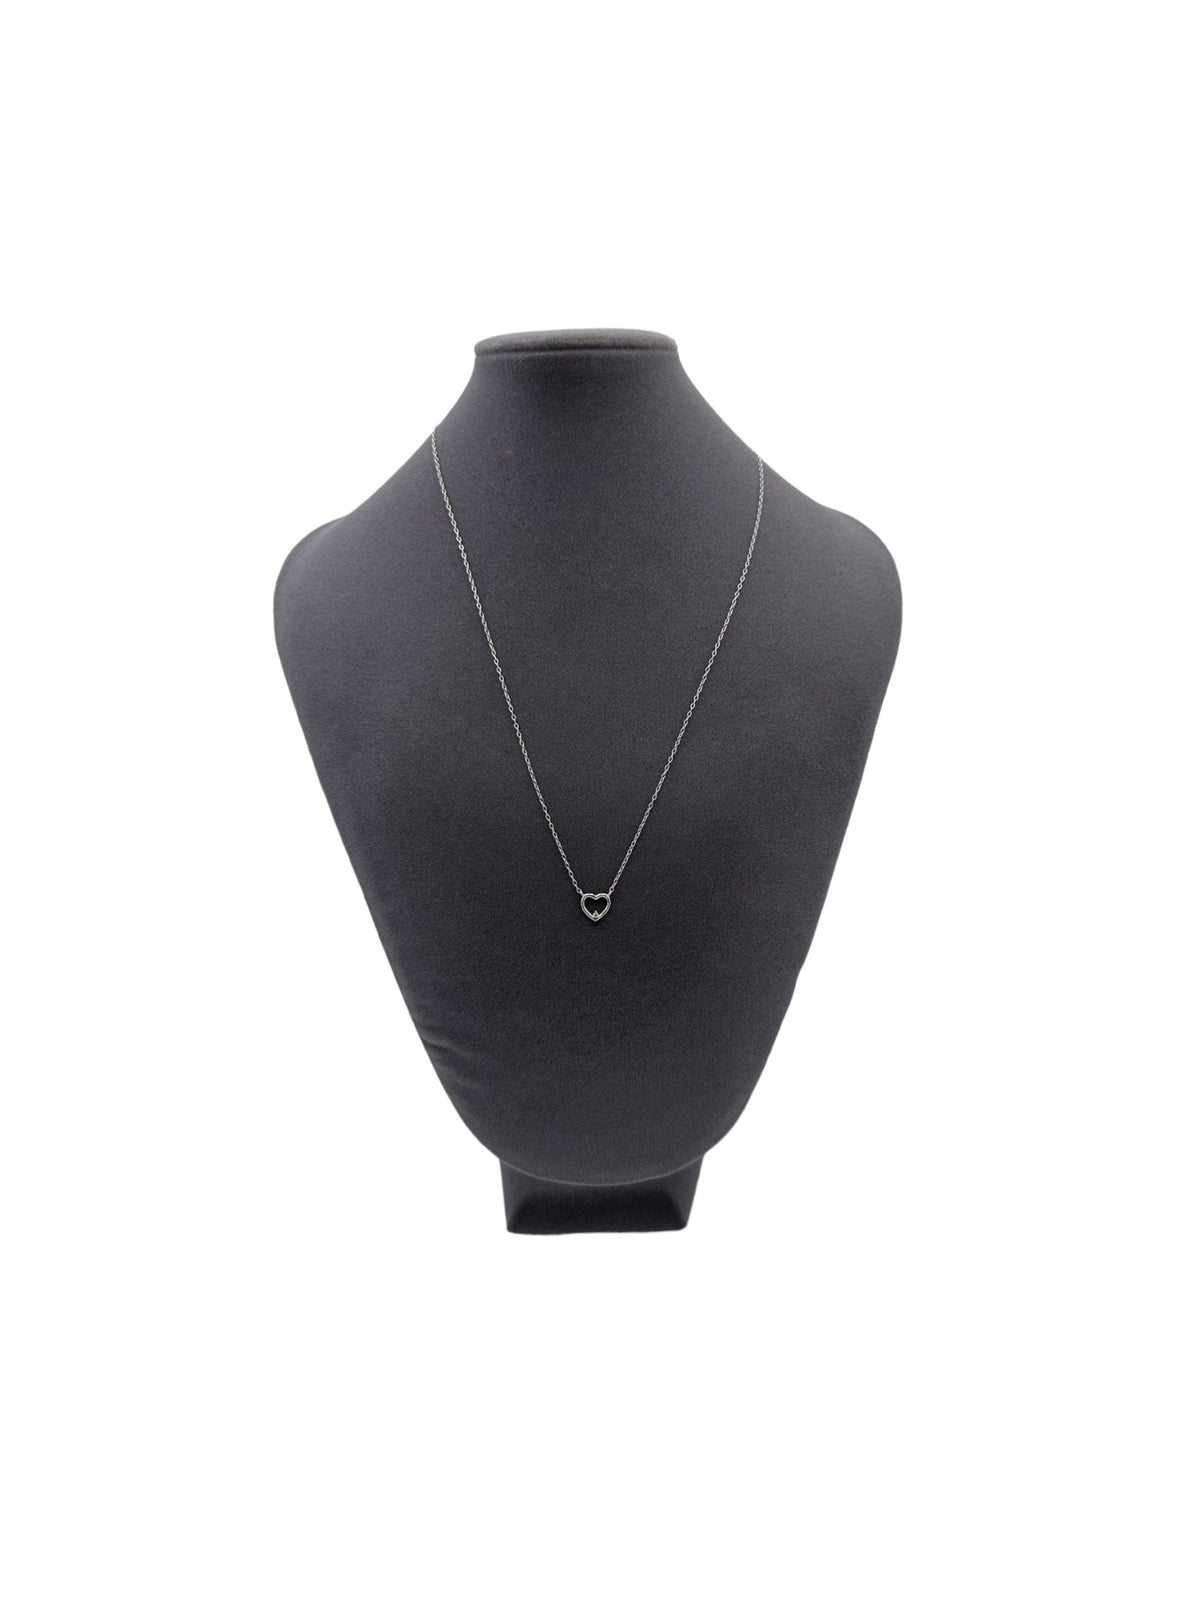 Sterling Silver Feminine Petite Open-Heart Diamond Necklace - 24 Wishes Vintage Jewelry